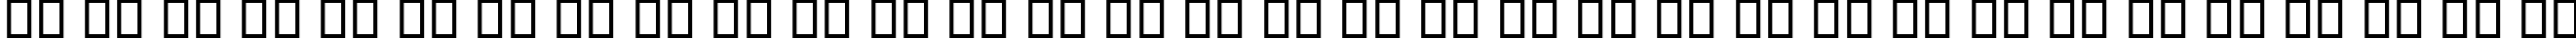 Пример написания русского алфавита шрифтом B Aseman Italic